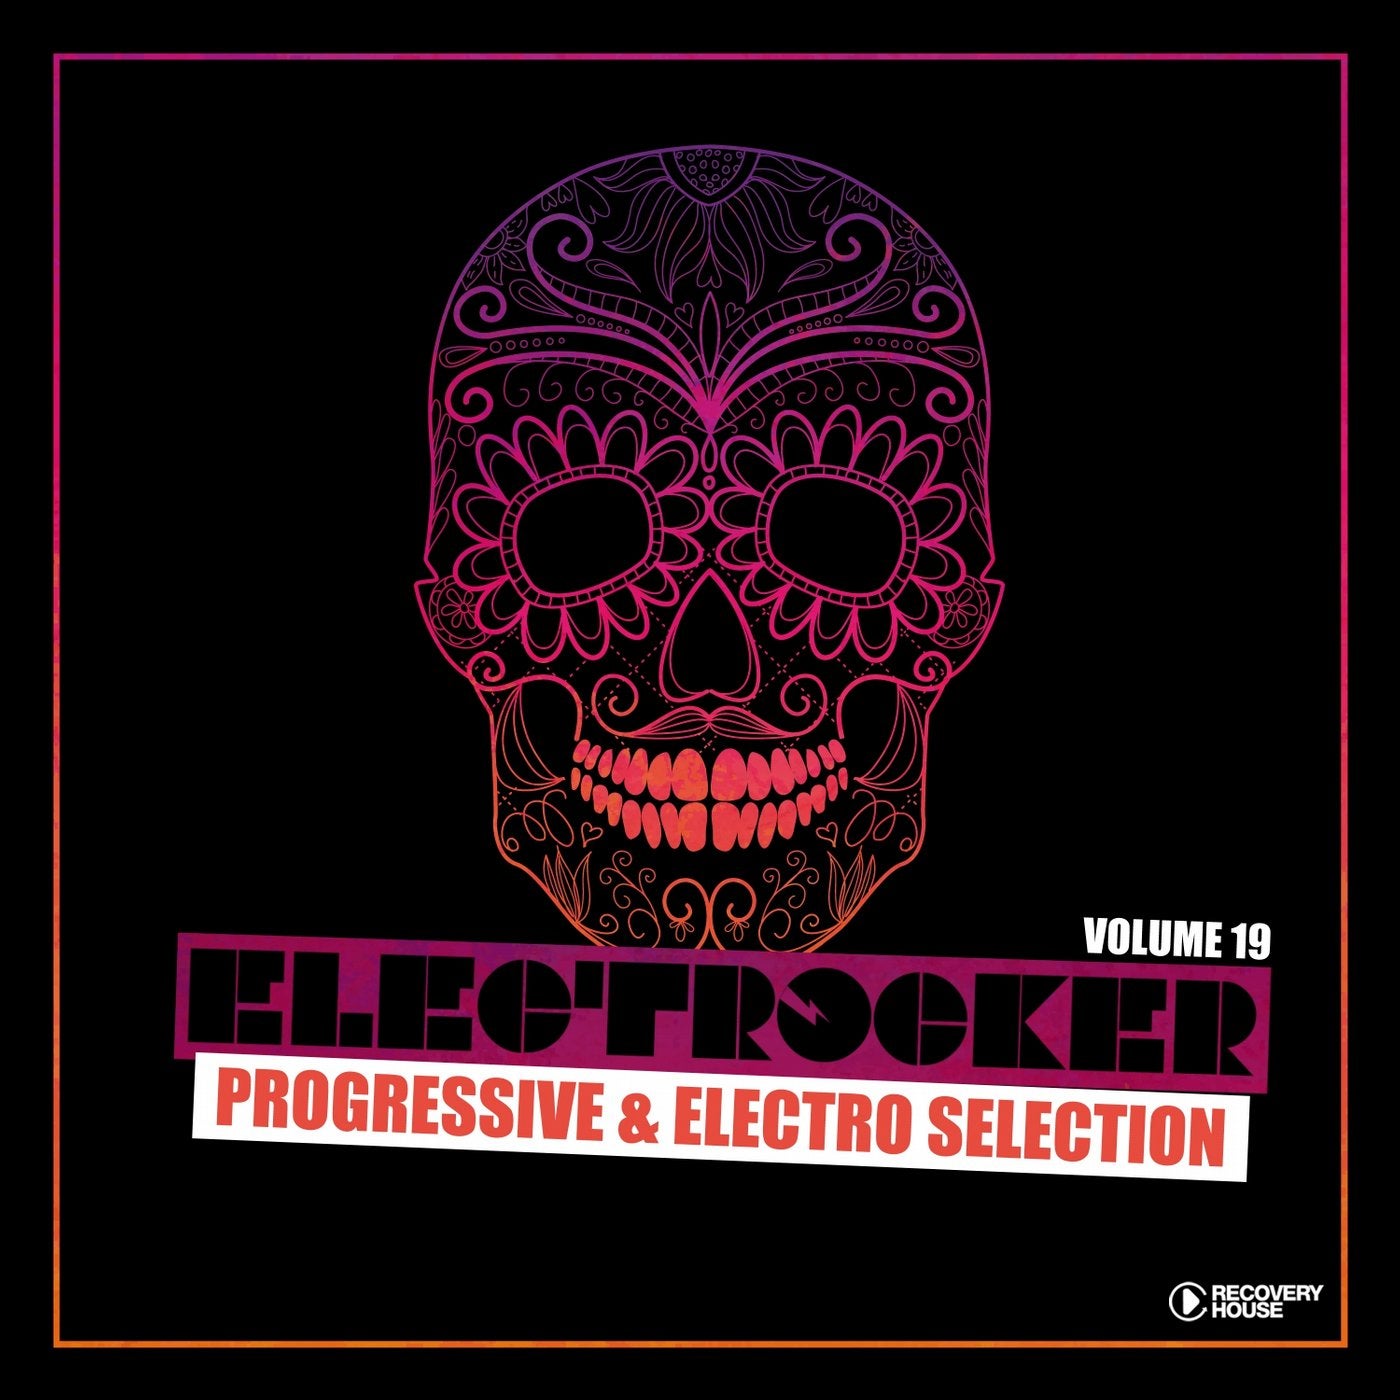 Electrocker - Progressive & Electro Selection Vol. 19